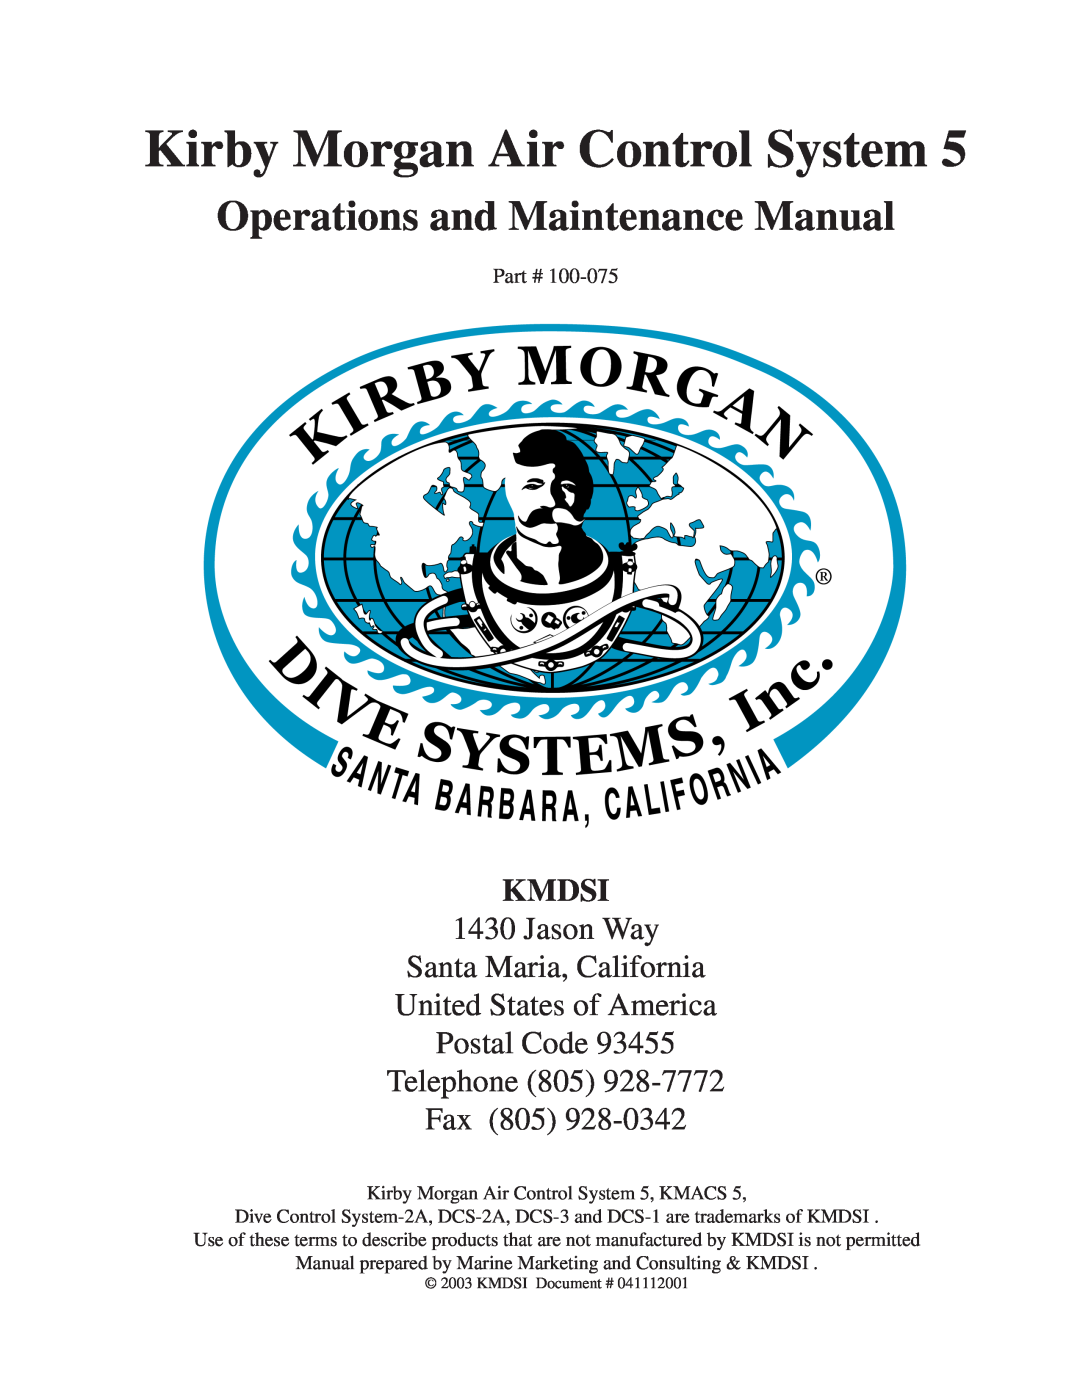 Kirby manual Kirby Morgan Air Control System, Operations and Maintenance Manual, Kmdsi, Telephone 805 Fax 